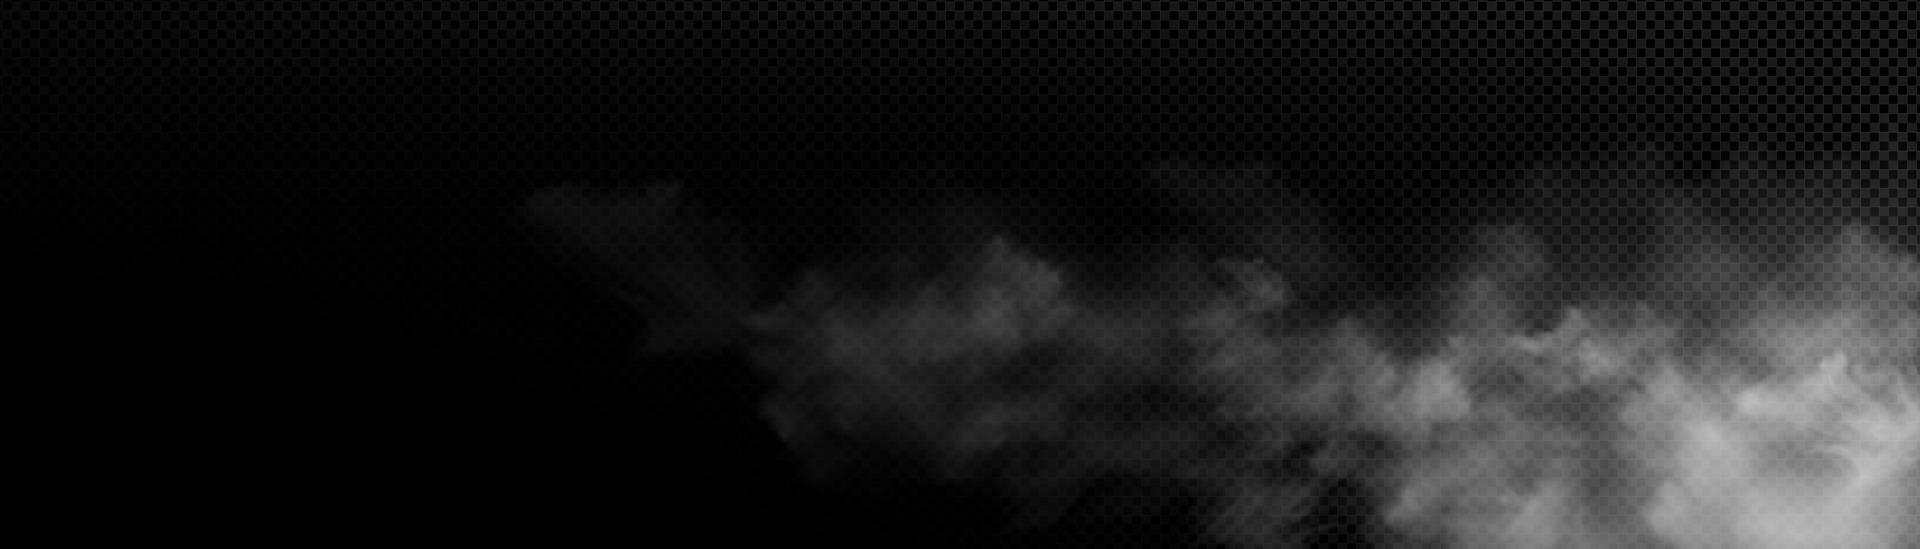 fumaça realista, nuvens brancas sobre fundo preto vetor